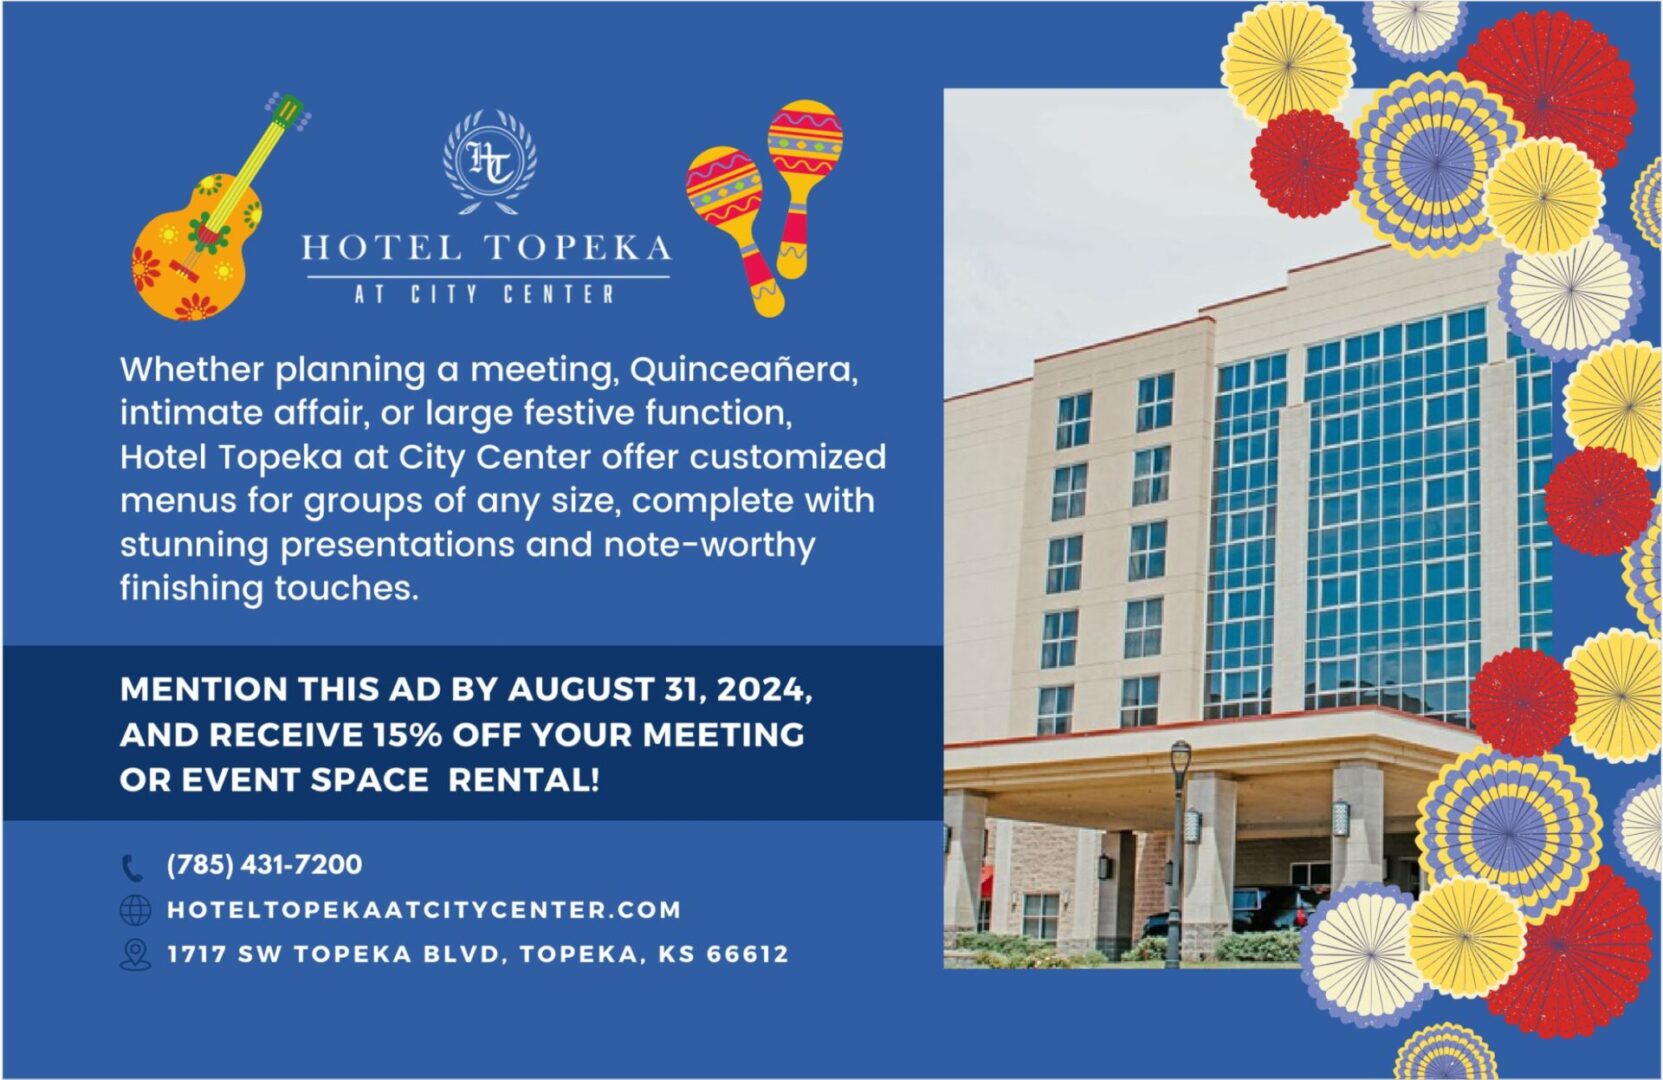 Hotel Topeka Fiesta Ad 2024